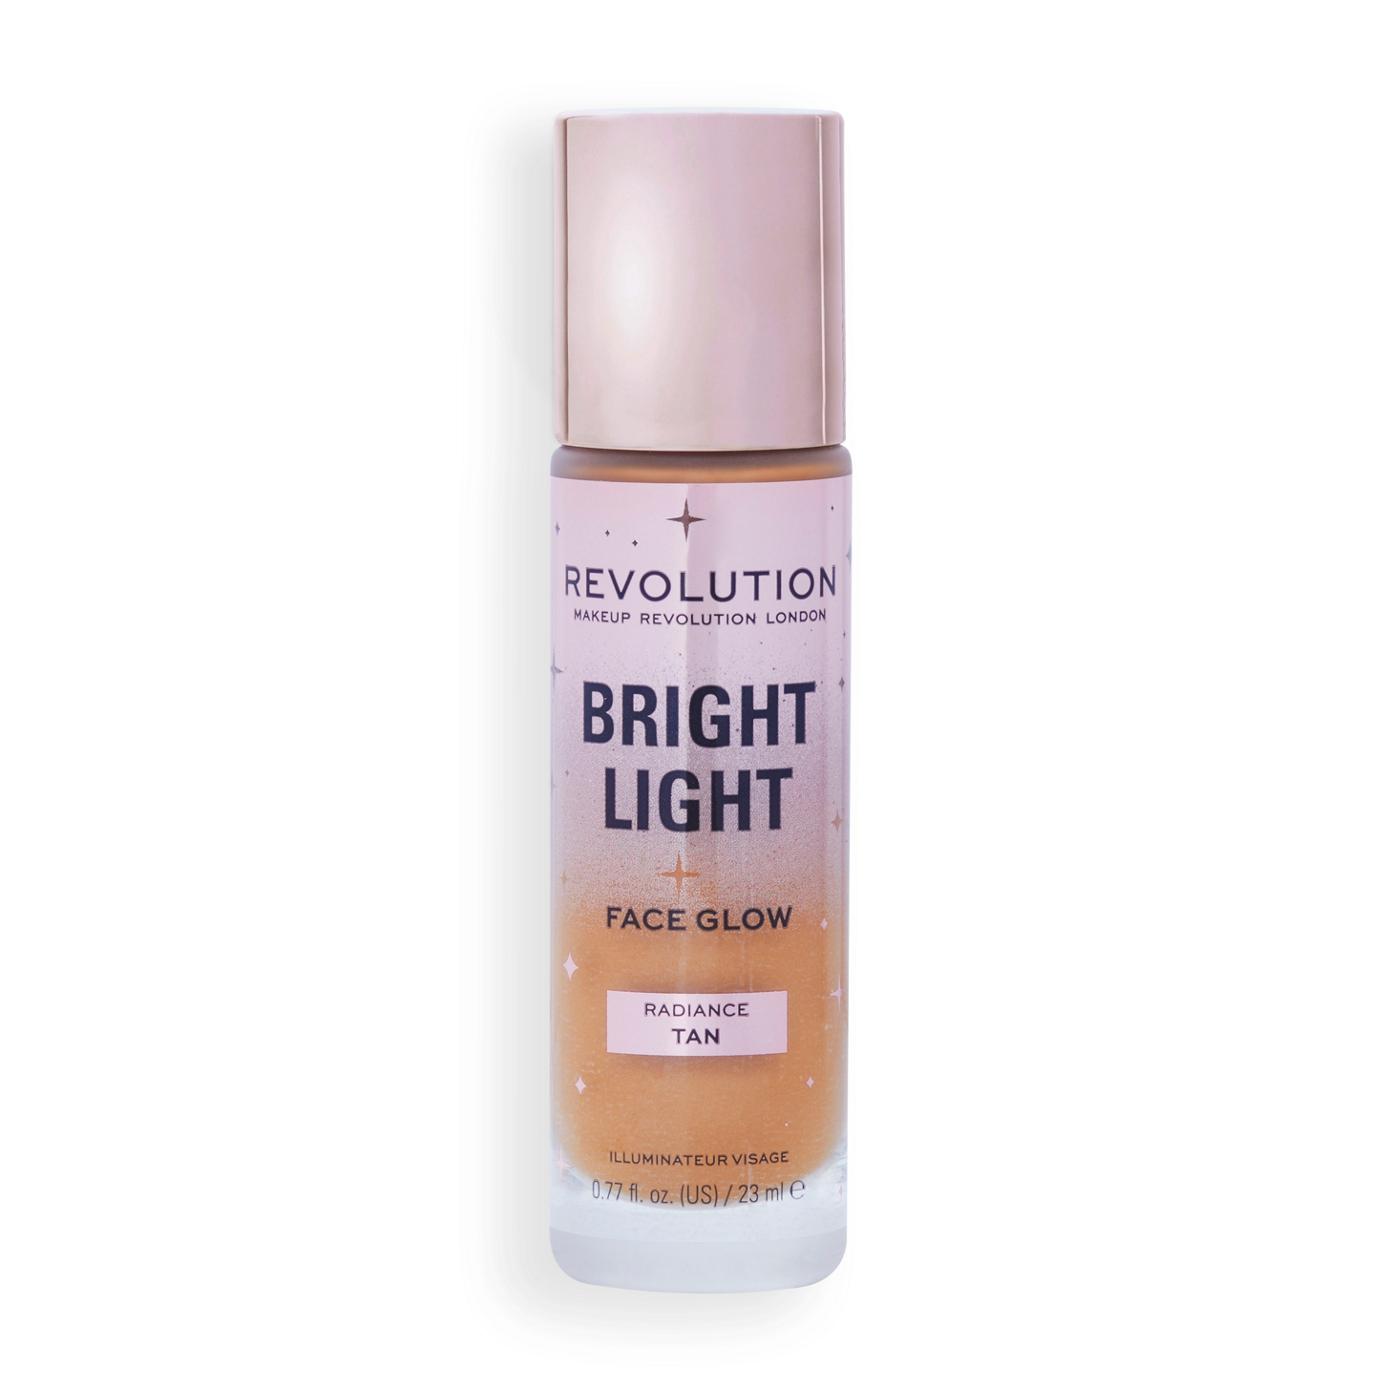 Makeup Revolution Bright Light Face Glow - Radiance Tan; image 1 of 3